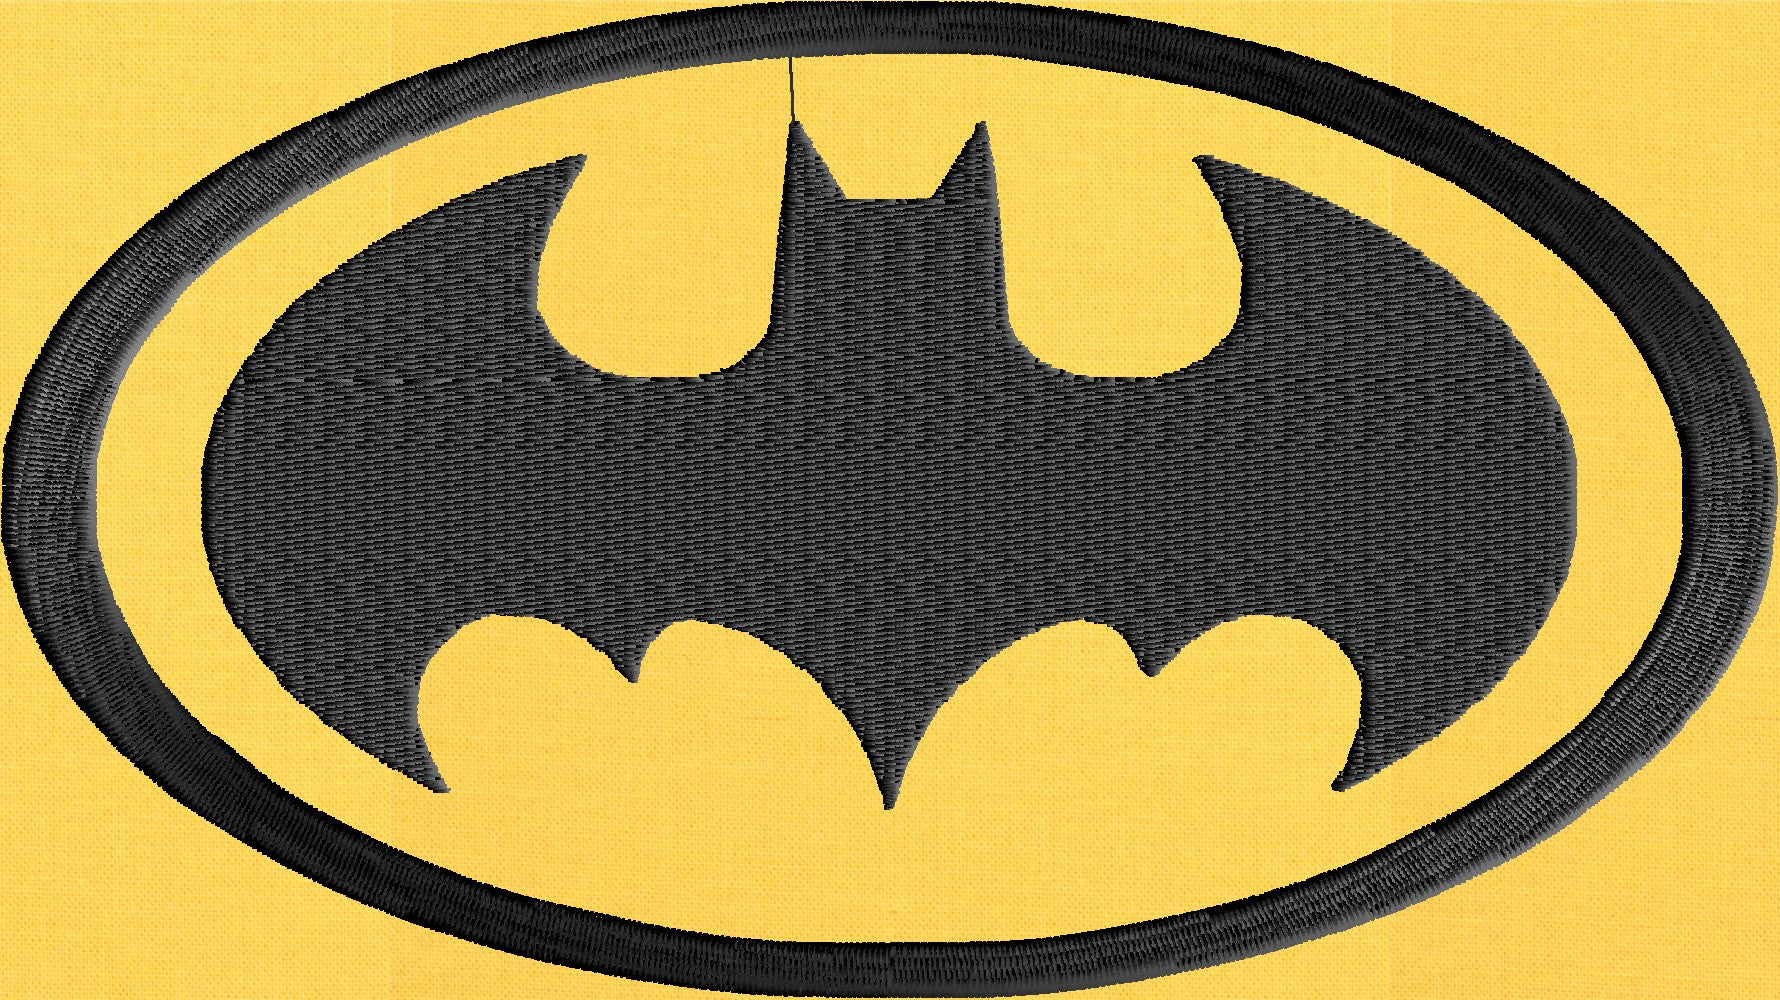 BAT MAN Embroidery Design - EMBROIDERY Design FILE - Instant download - fun stuff